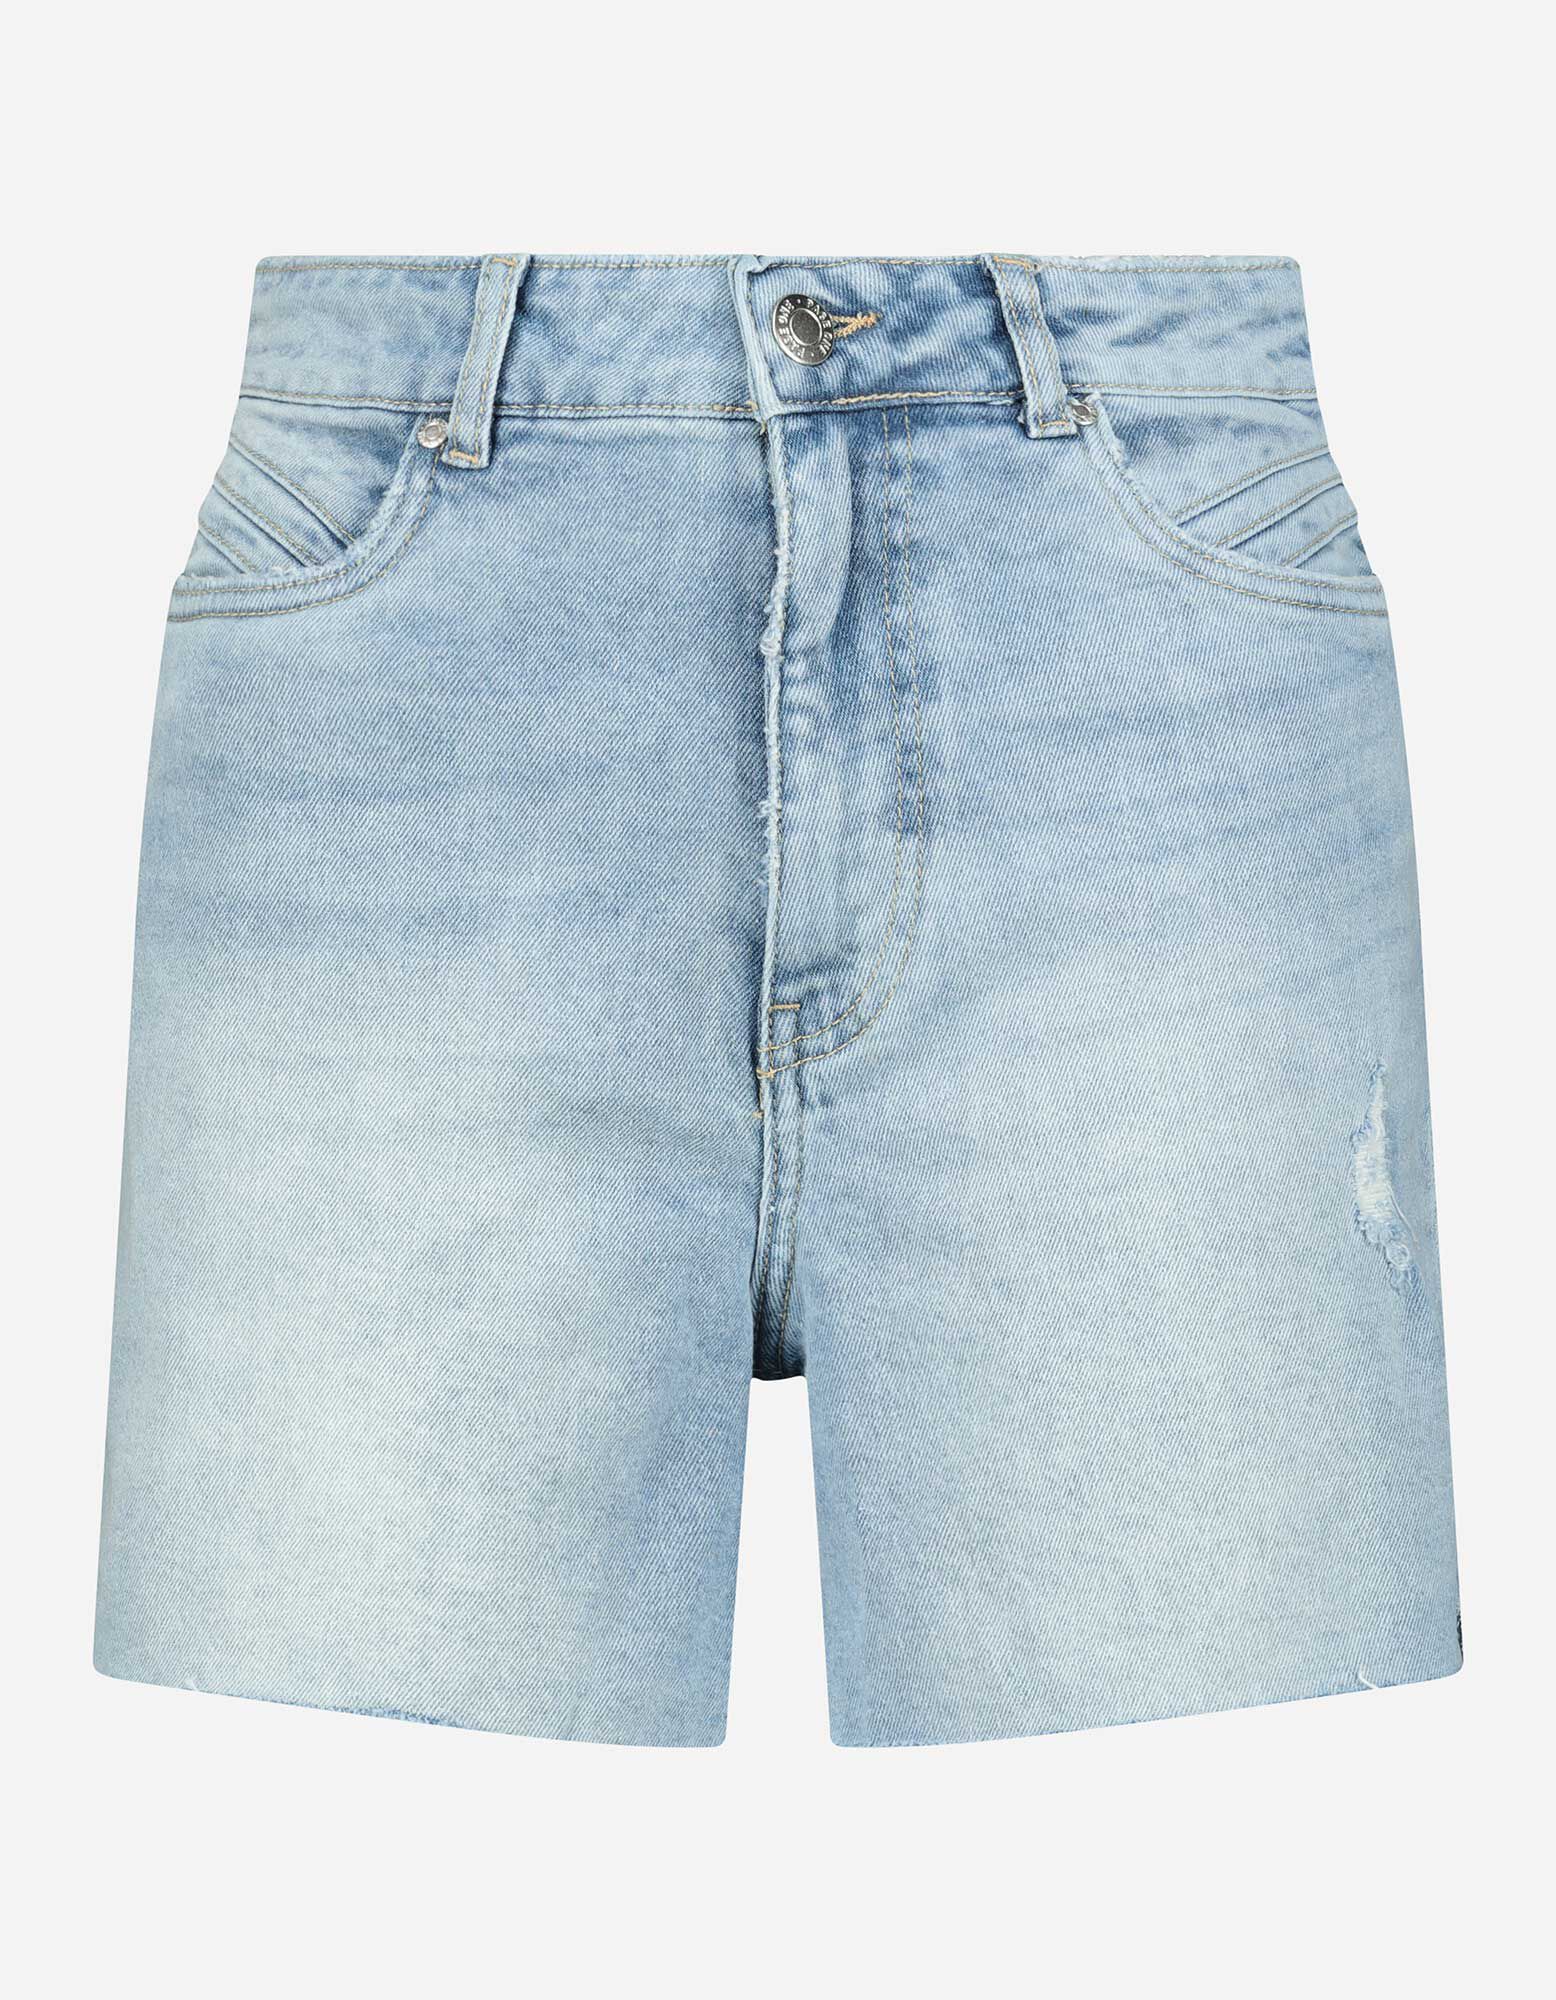 Blu S Sahoco Pantaloncini jeans MODA DONNA Jeans Pantaloncini jeans NO STYLE sconto 45% 